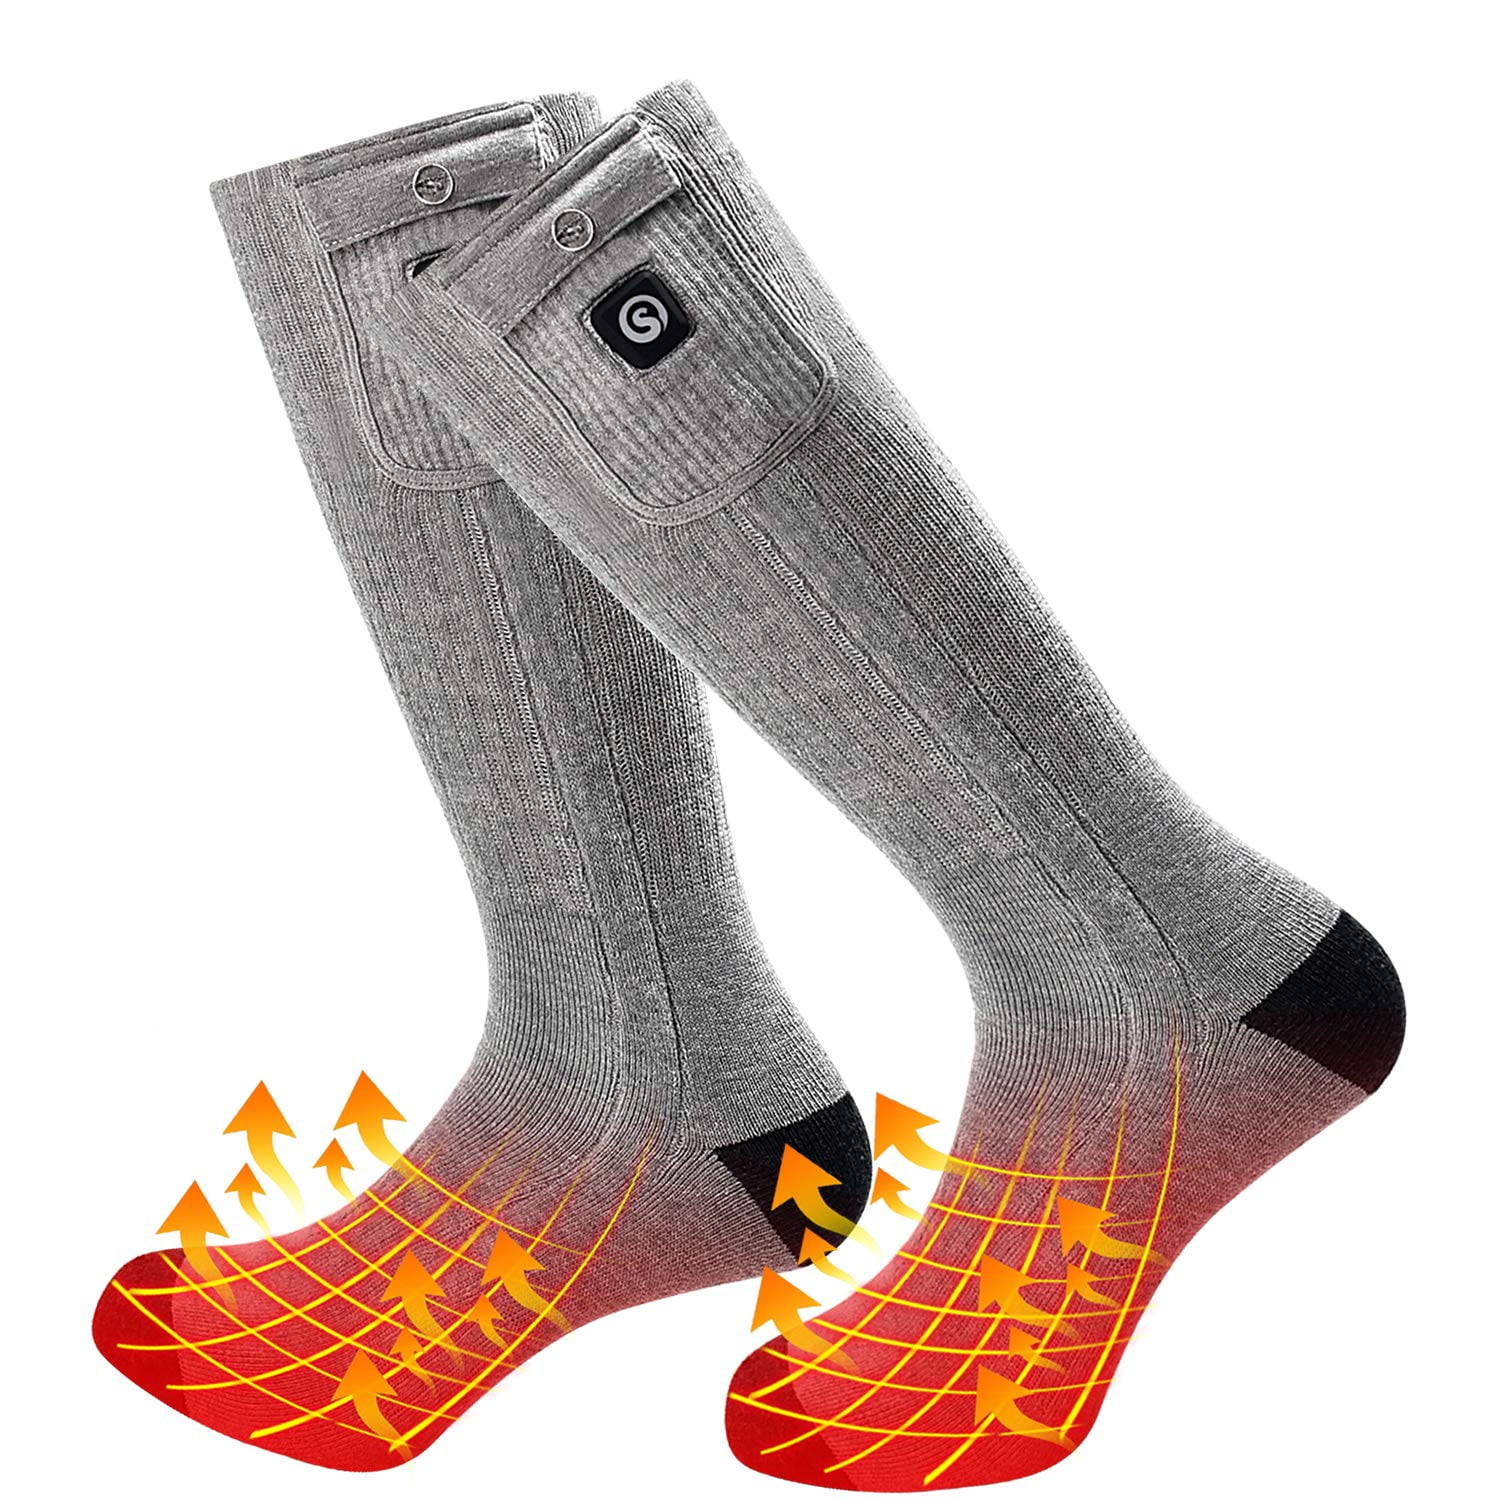 Milwaukee Performance Men's Heated Socks Powerful Heating Battery Pack Included 